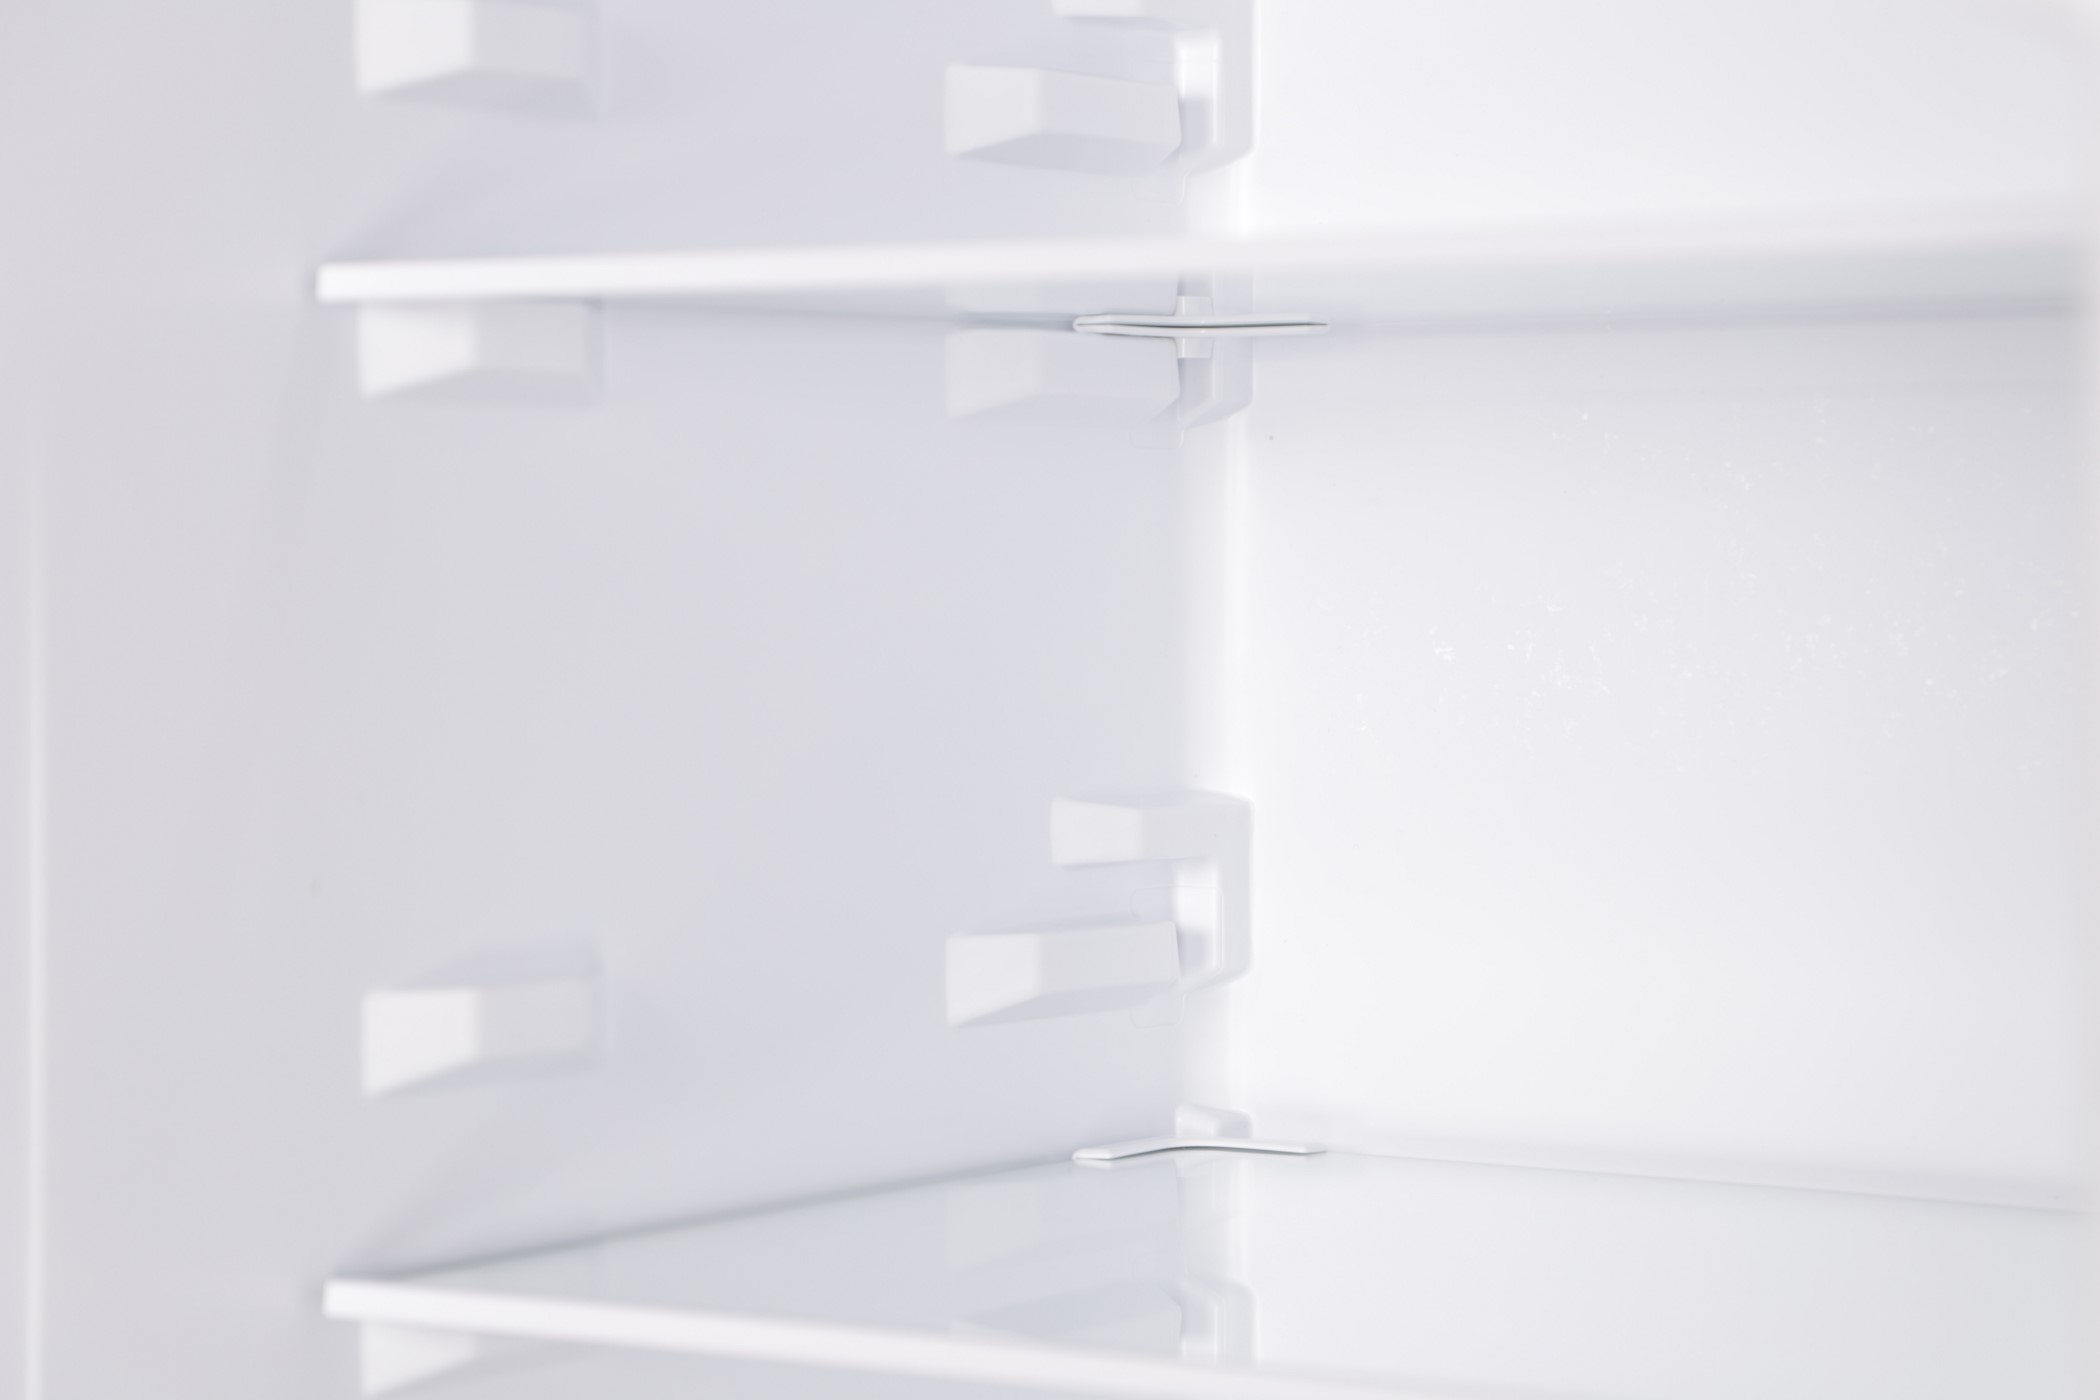 Kühlschrank Kühl Gefrierkombination Standgerät freistehend Inox Look Respekta